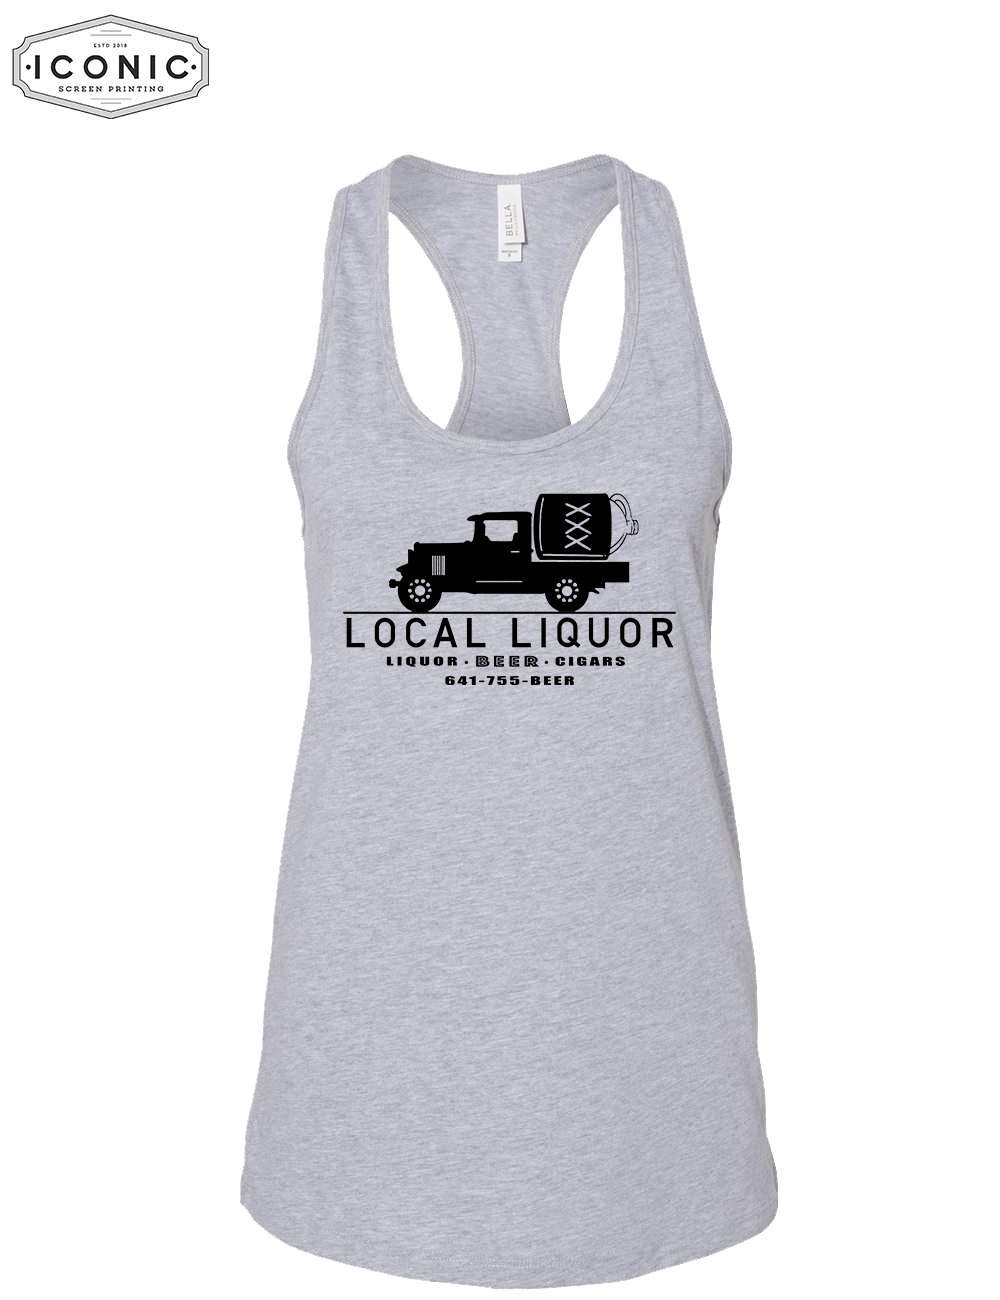 Local Liquor - Women's Jersey Racerback Tank